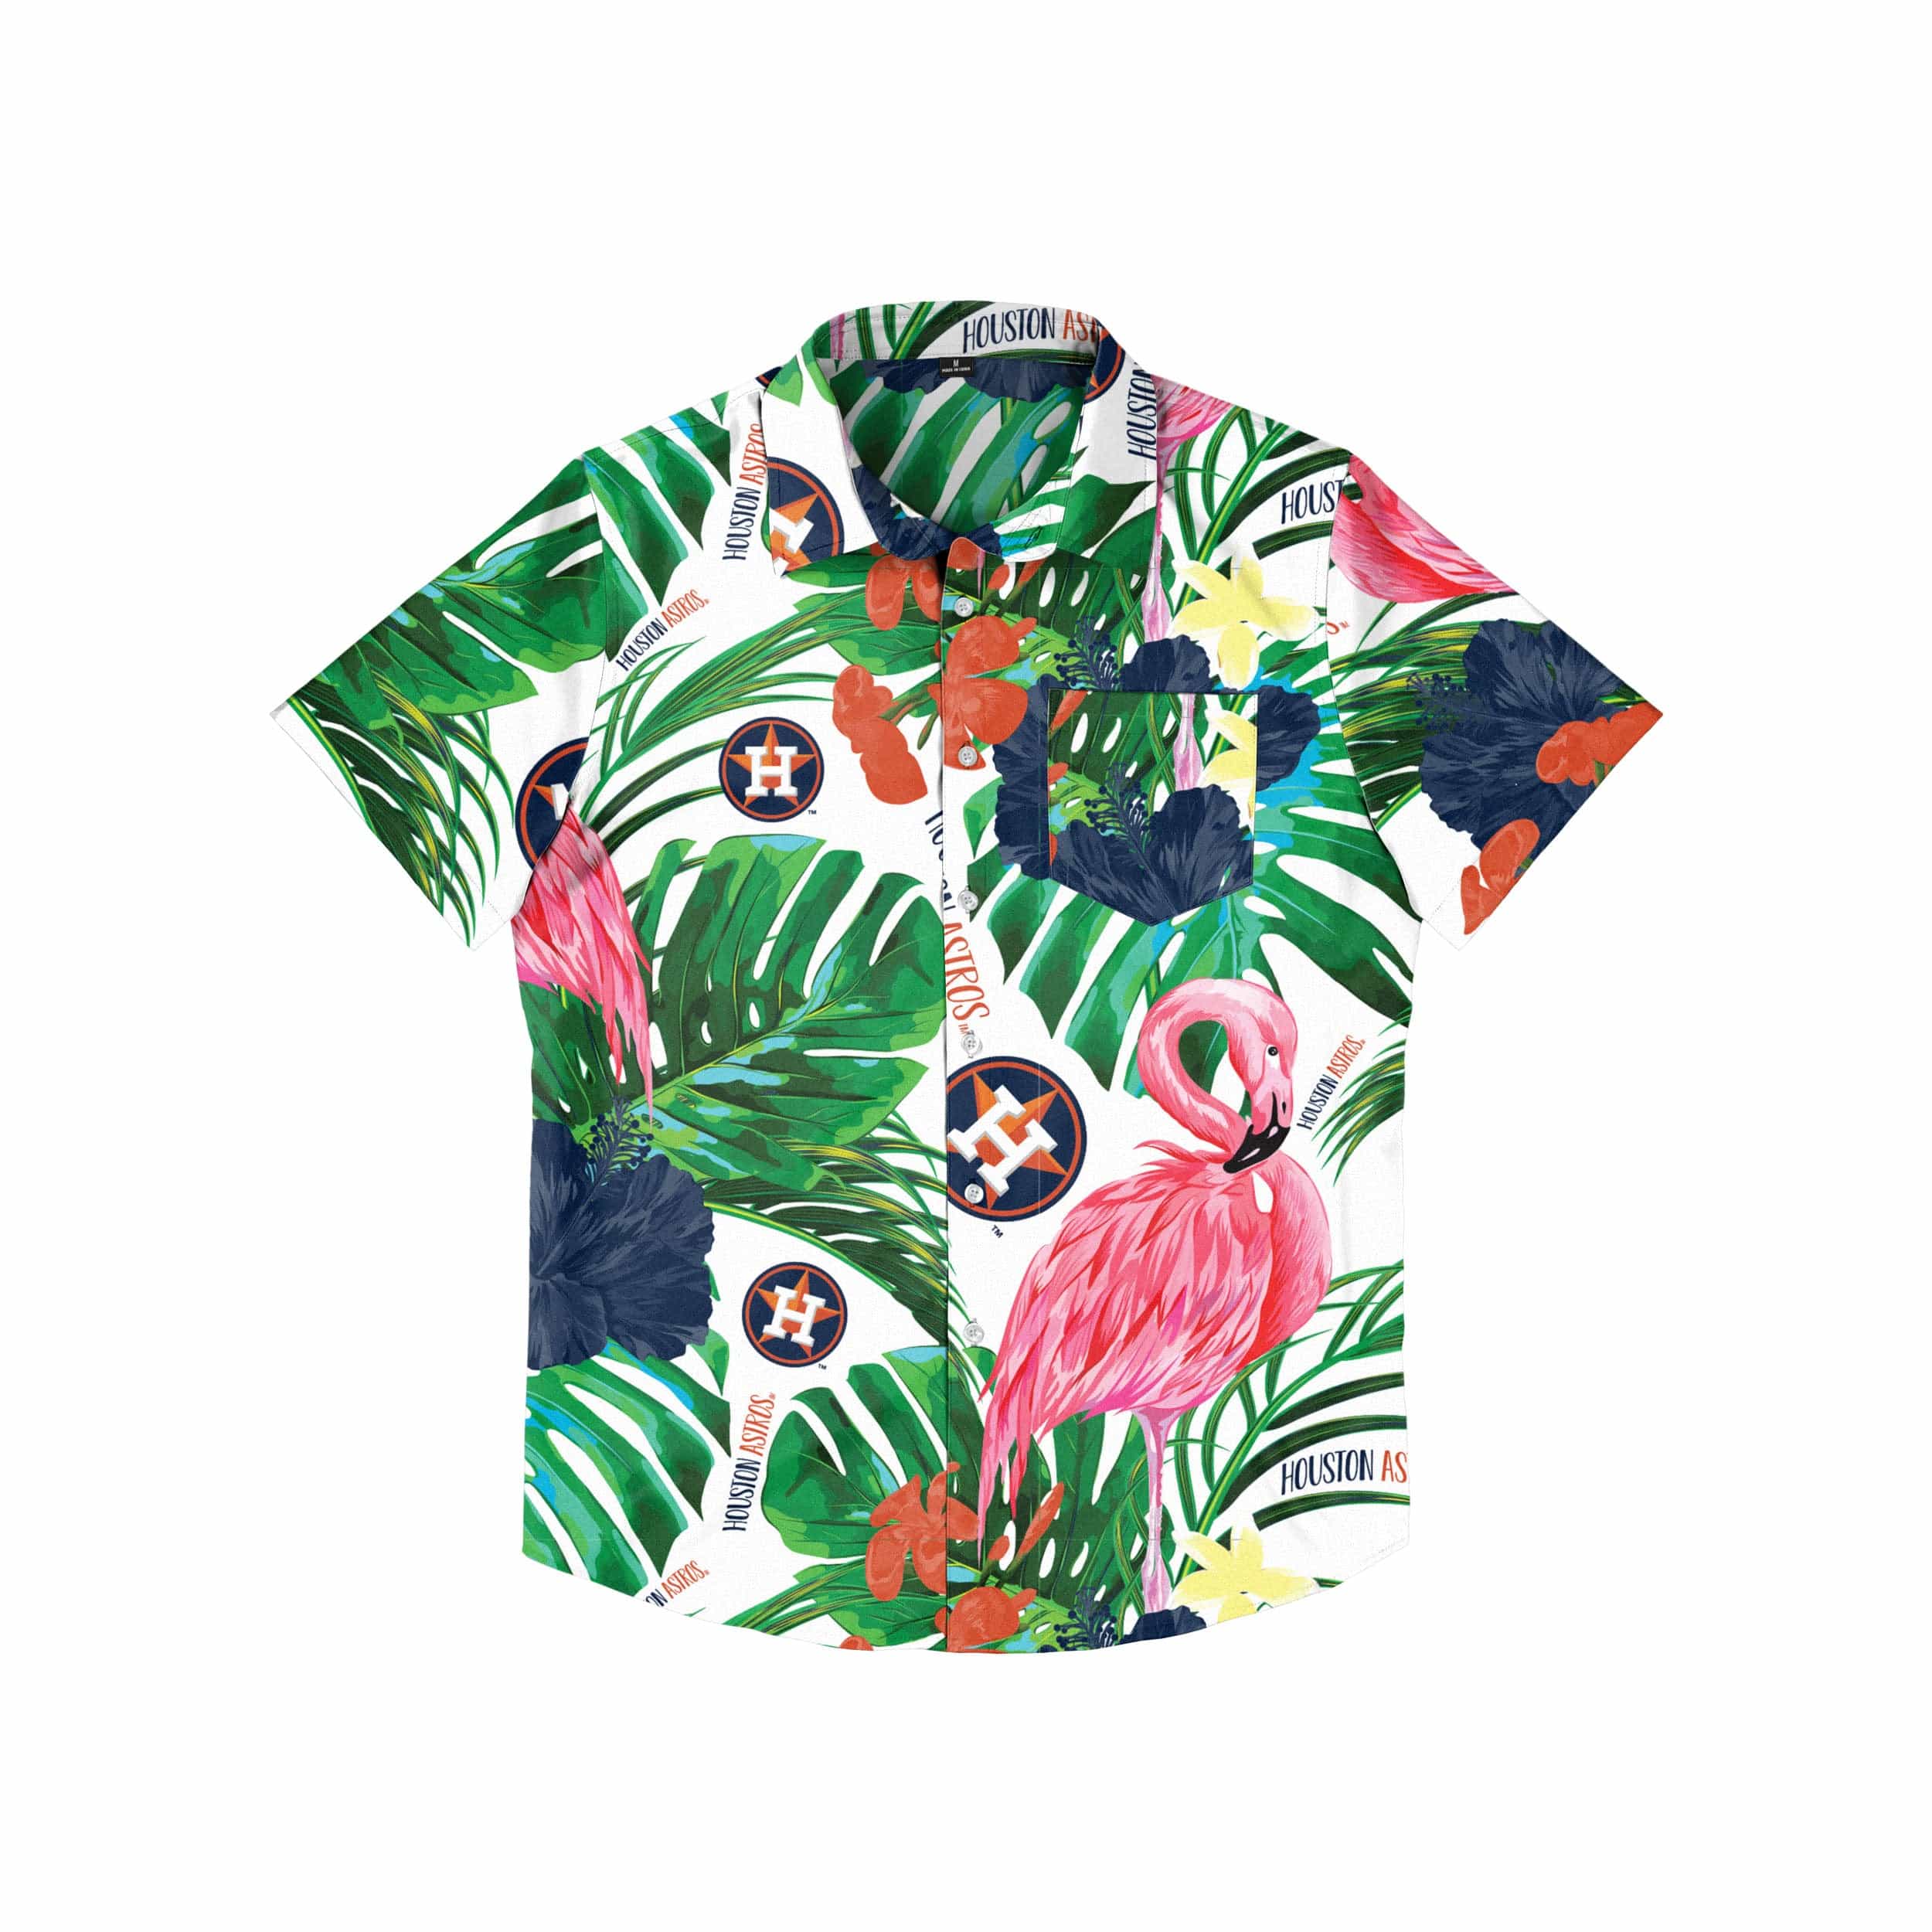 Astros Tropical Shirt Flamingo Banana Leaf Houston Astros Gift